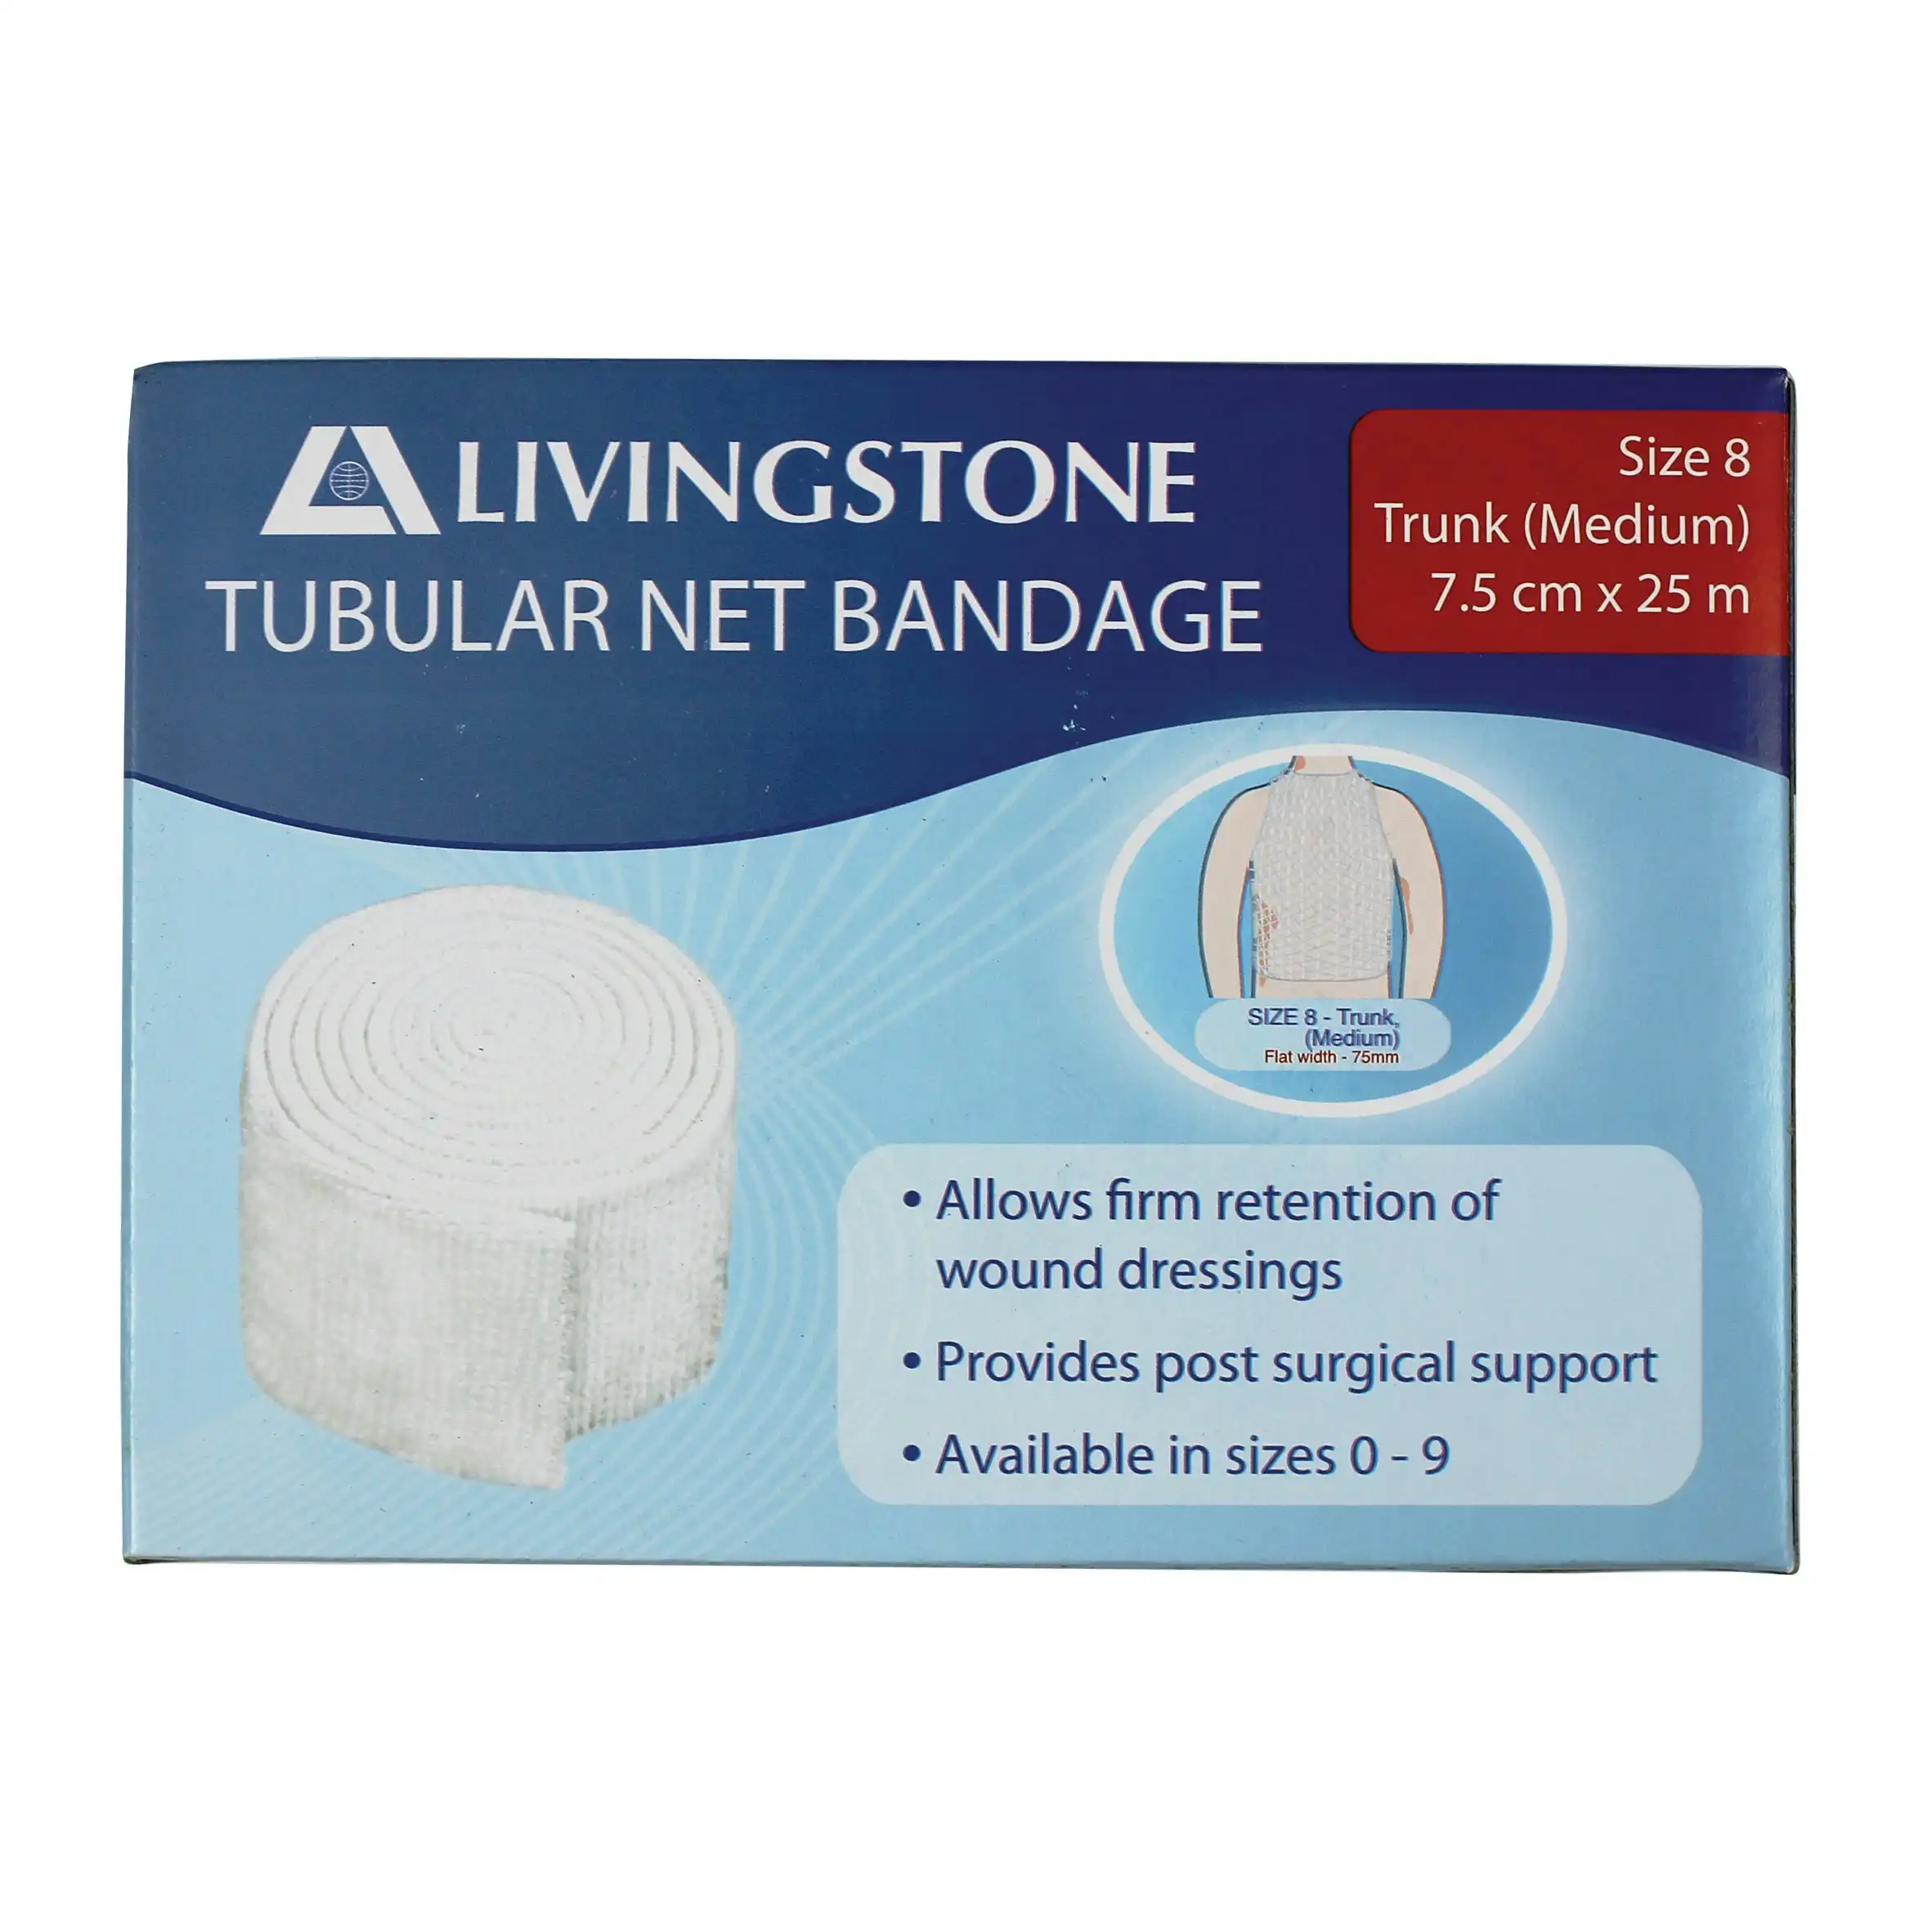 Livingstone Tubular Net Bandage Size K No. 8 Medium Trunk Flat Width 75mm 7.5m (unstretched) 25m (stretched)